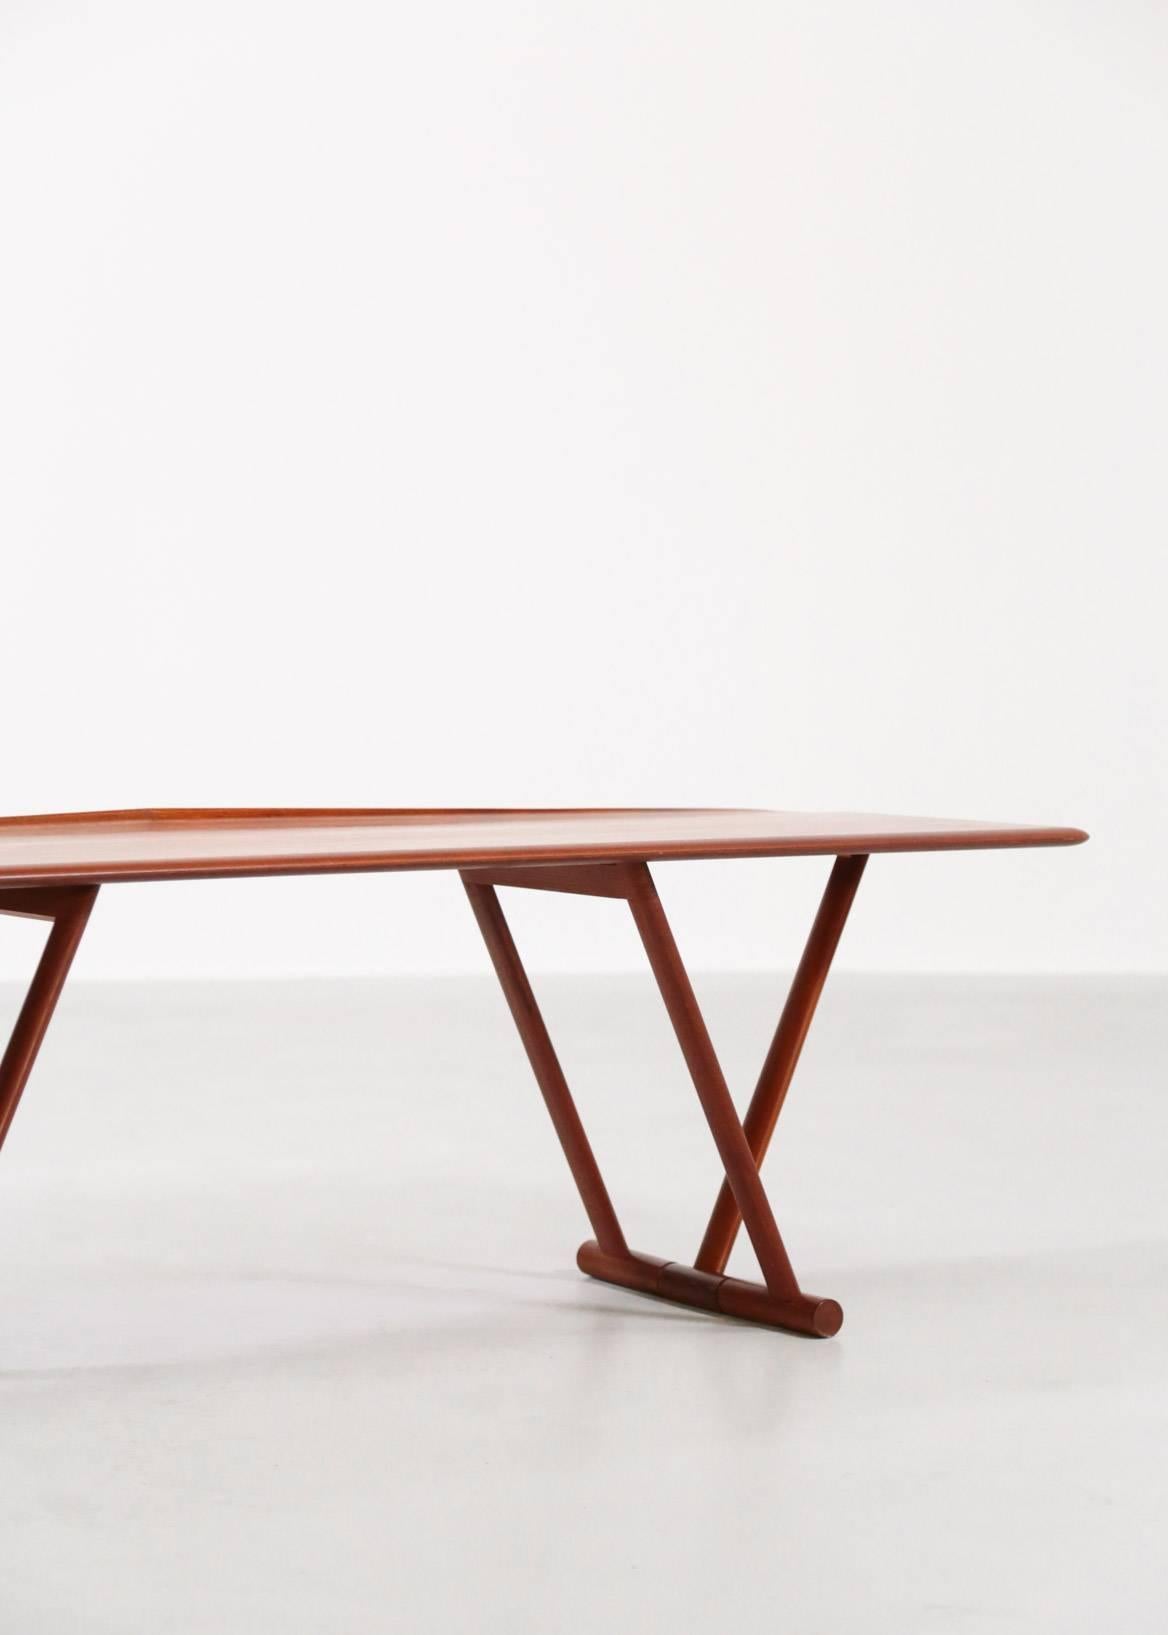 20th Century Scandinavian Coffee Table MK Craftsmanship, Teak, 1960s For Sale